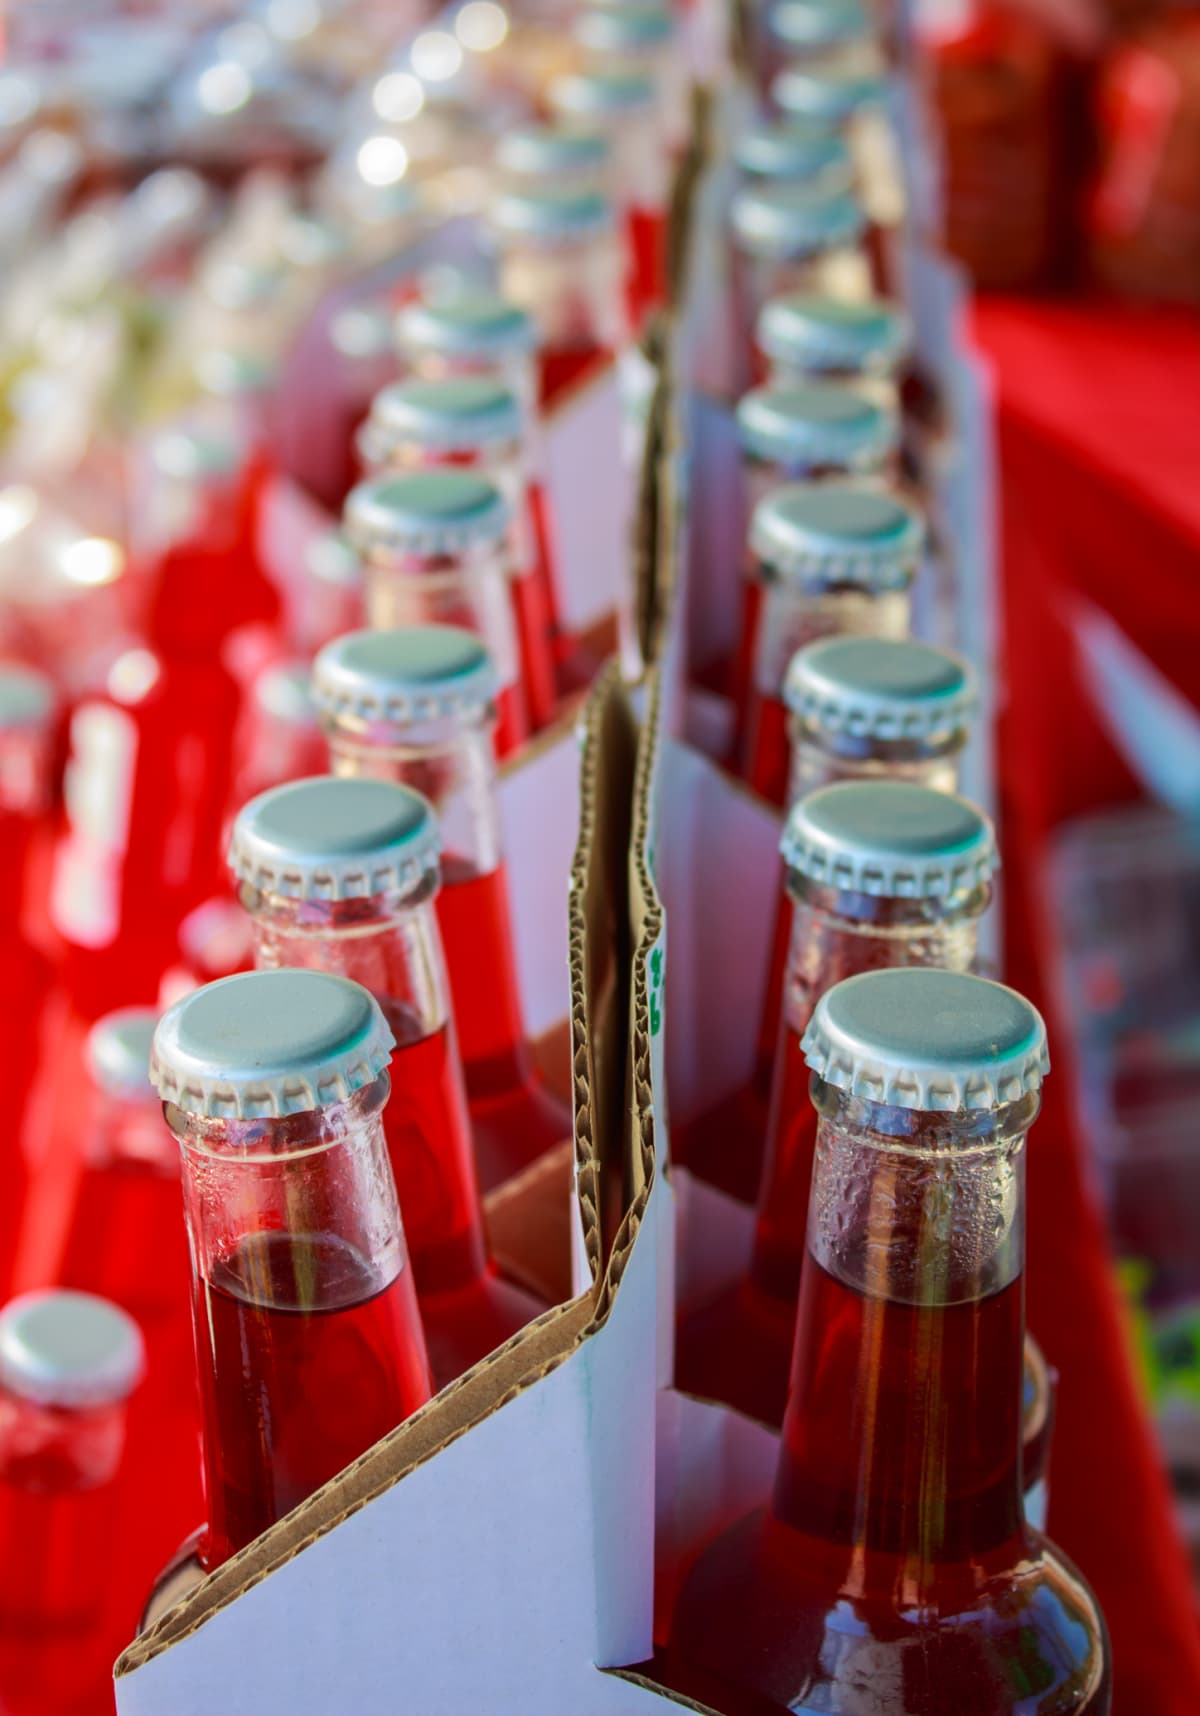 Closeup of assorted soda bottles